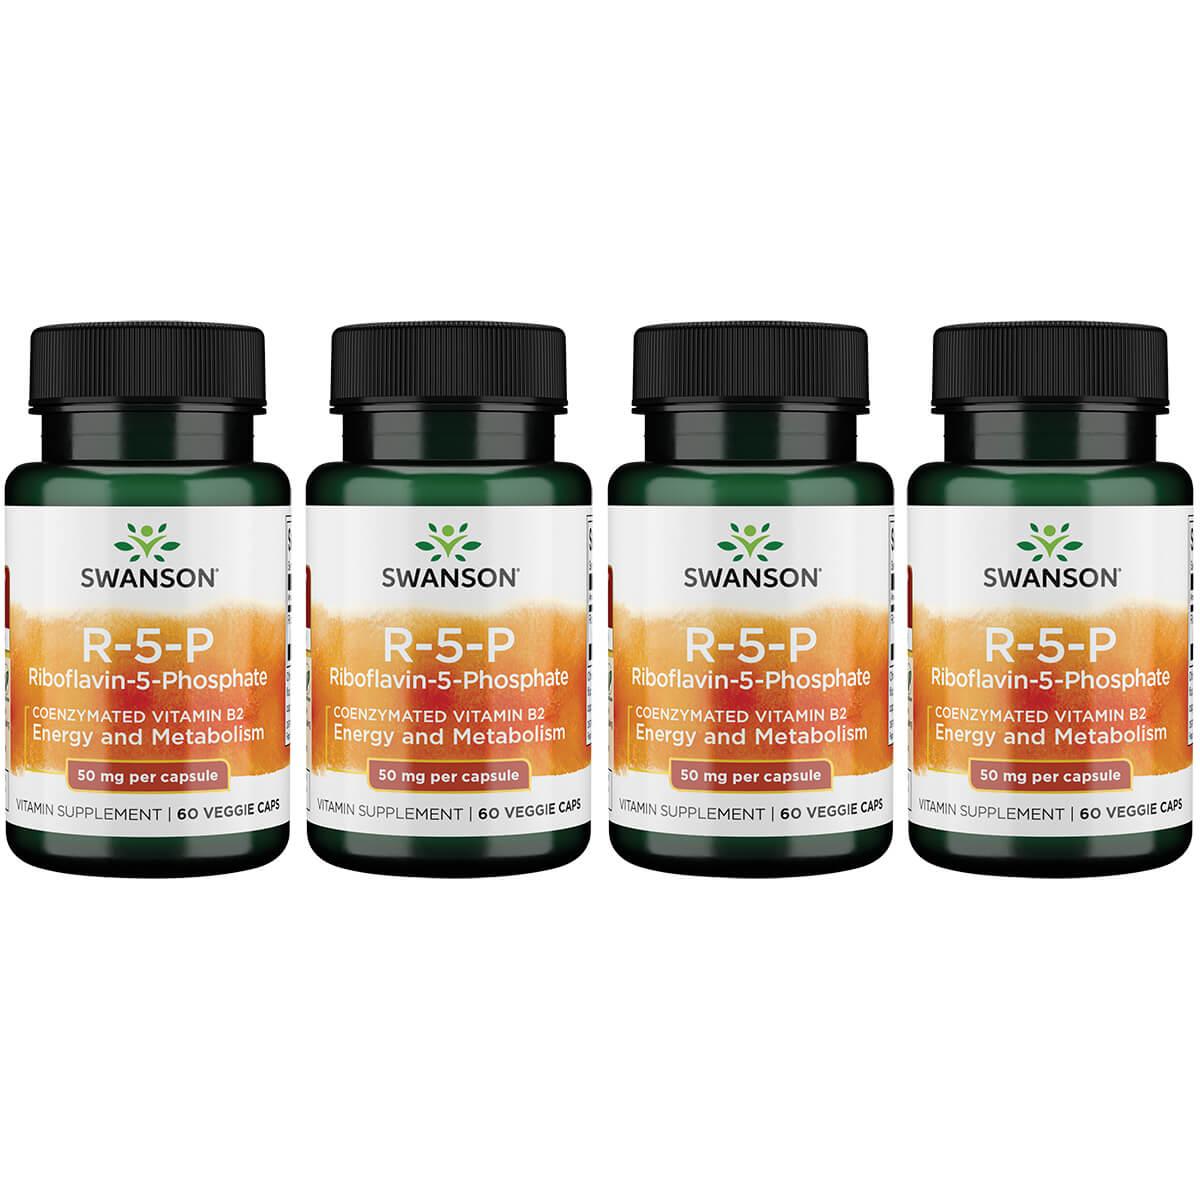 Swanson Ultra R-5-P Riboflavin-5-Phosphate 4 Pack Vitamin 50 mg 60 Veg Caps